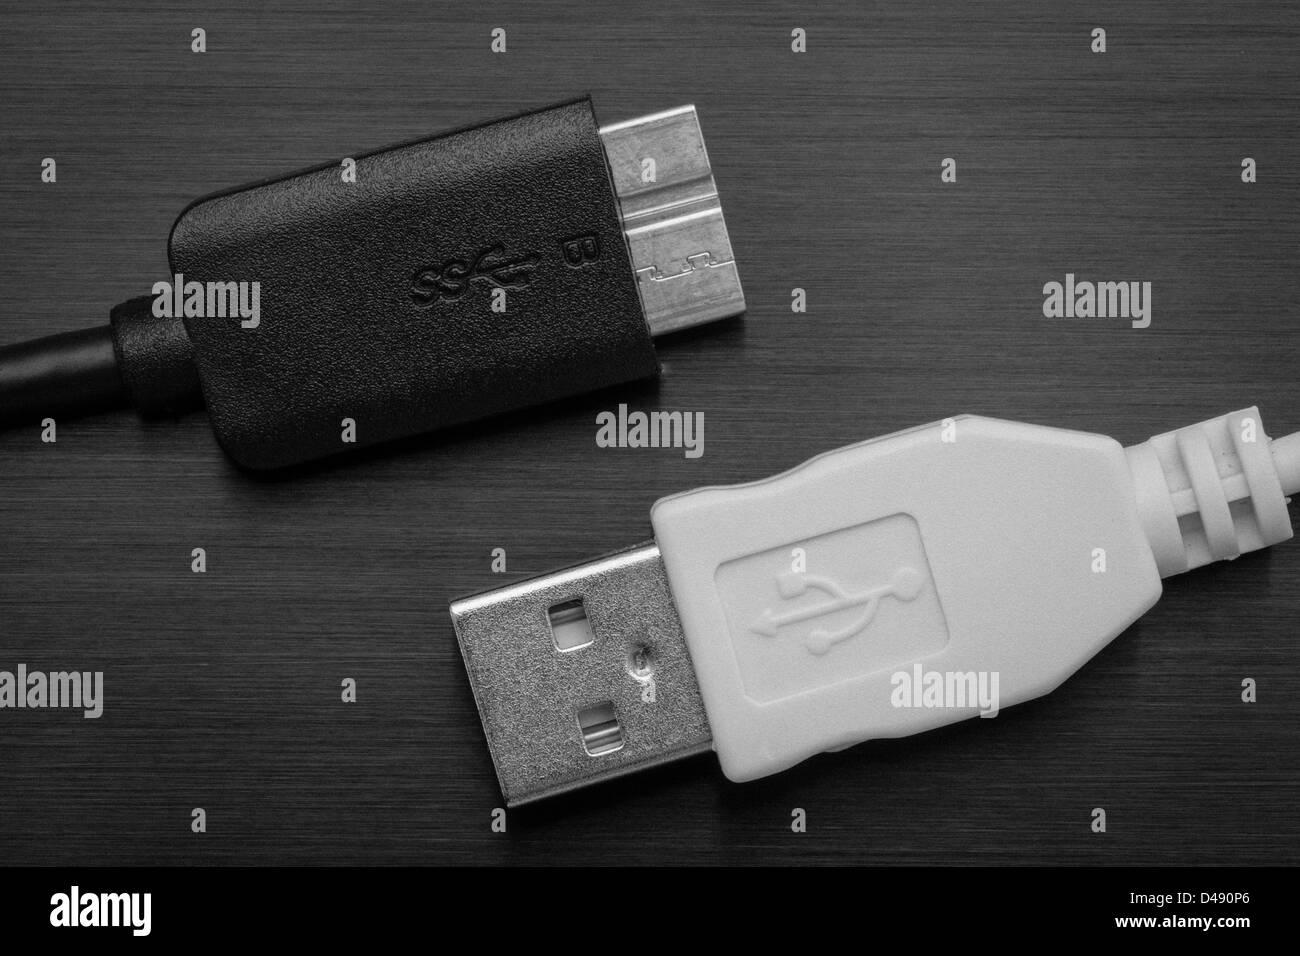 White USB and black USB SS Stock Photo